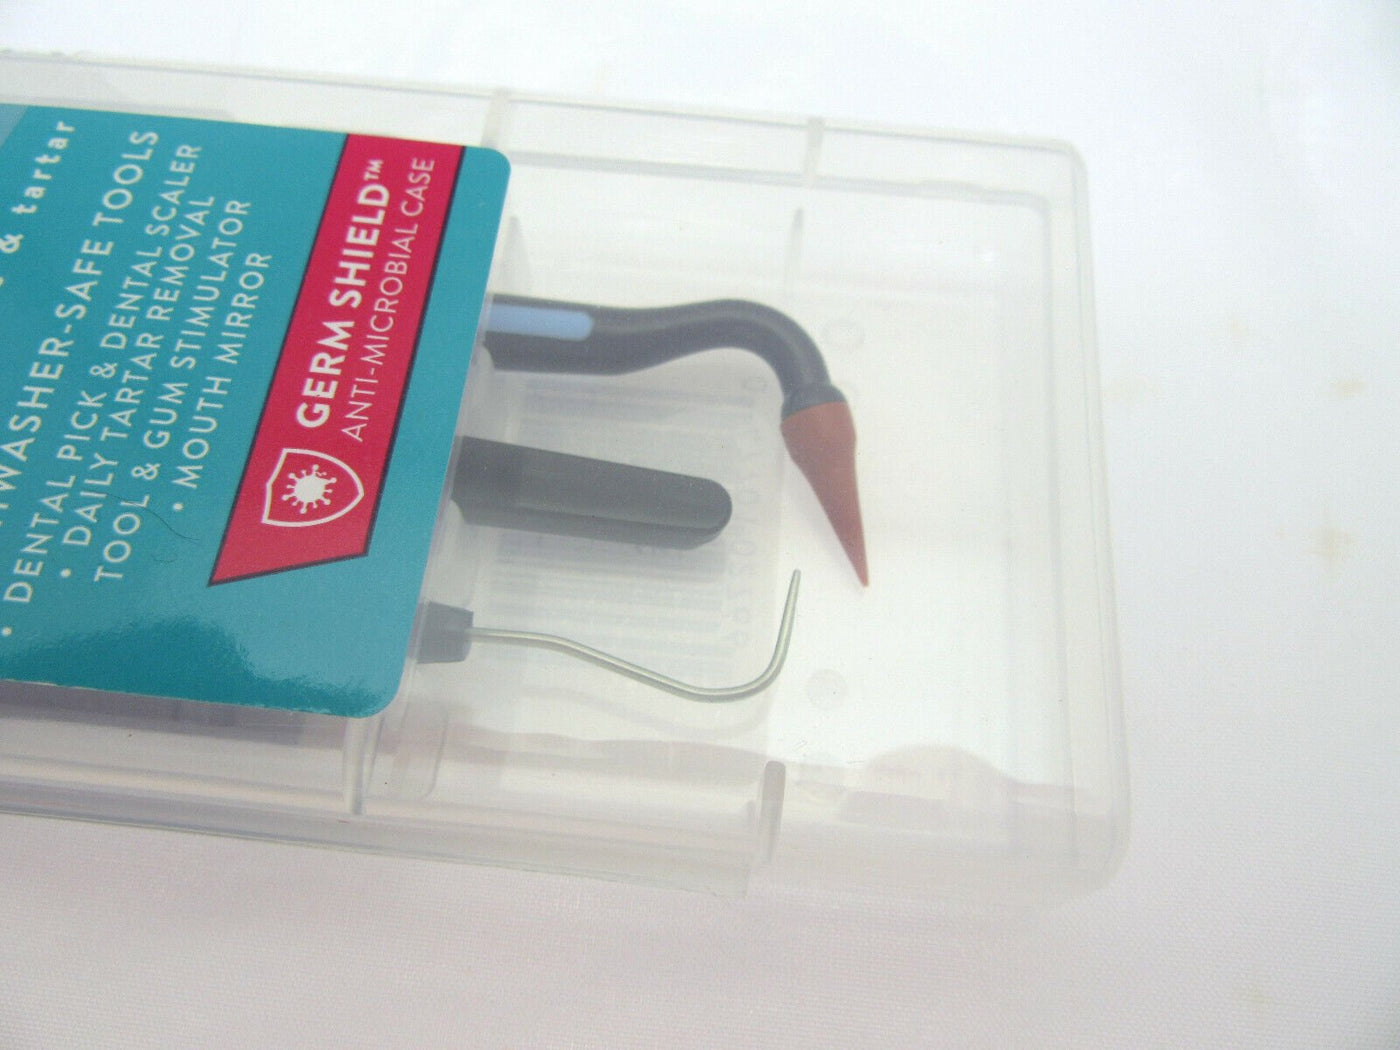 DenTek Professional Oral Care Kit. Dental Mirror Pick Scaler